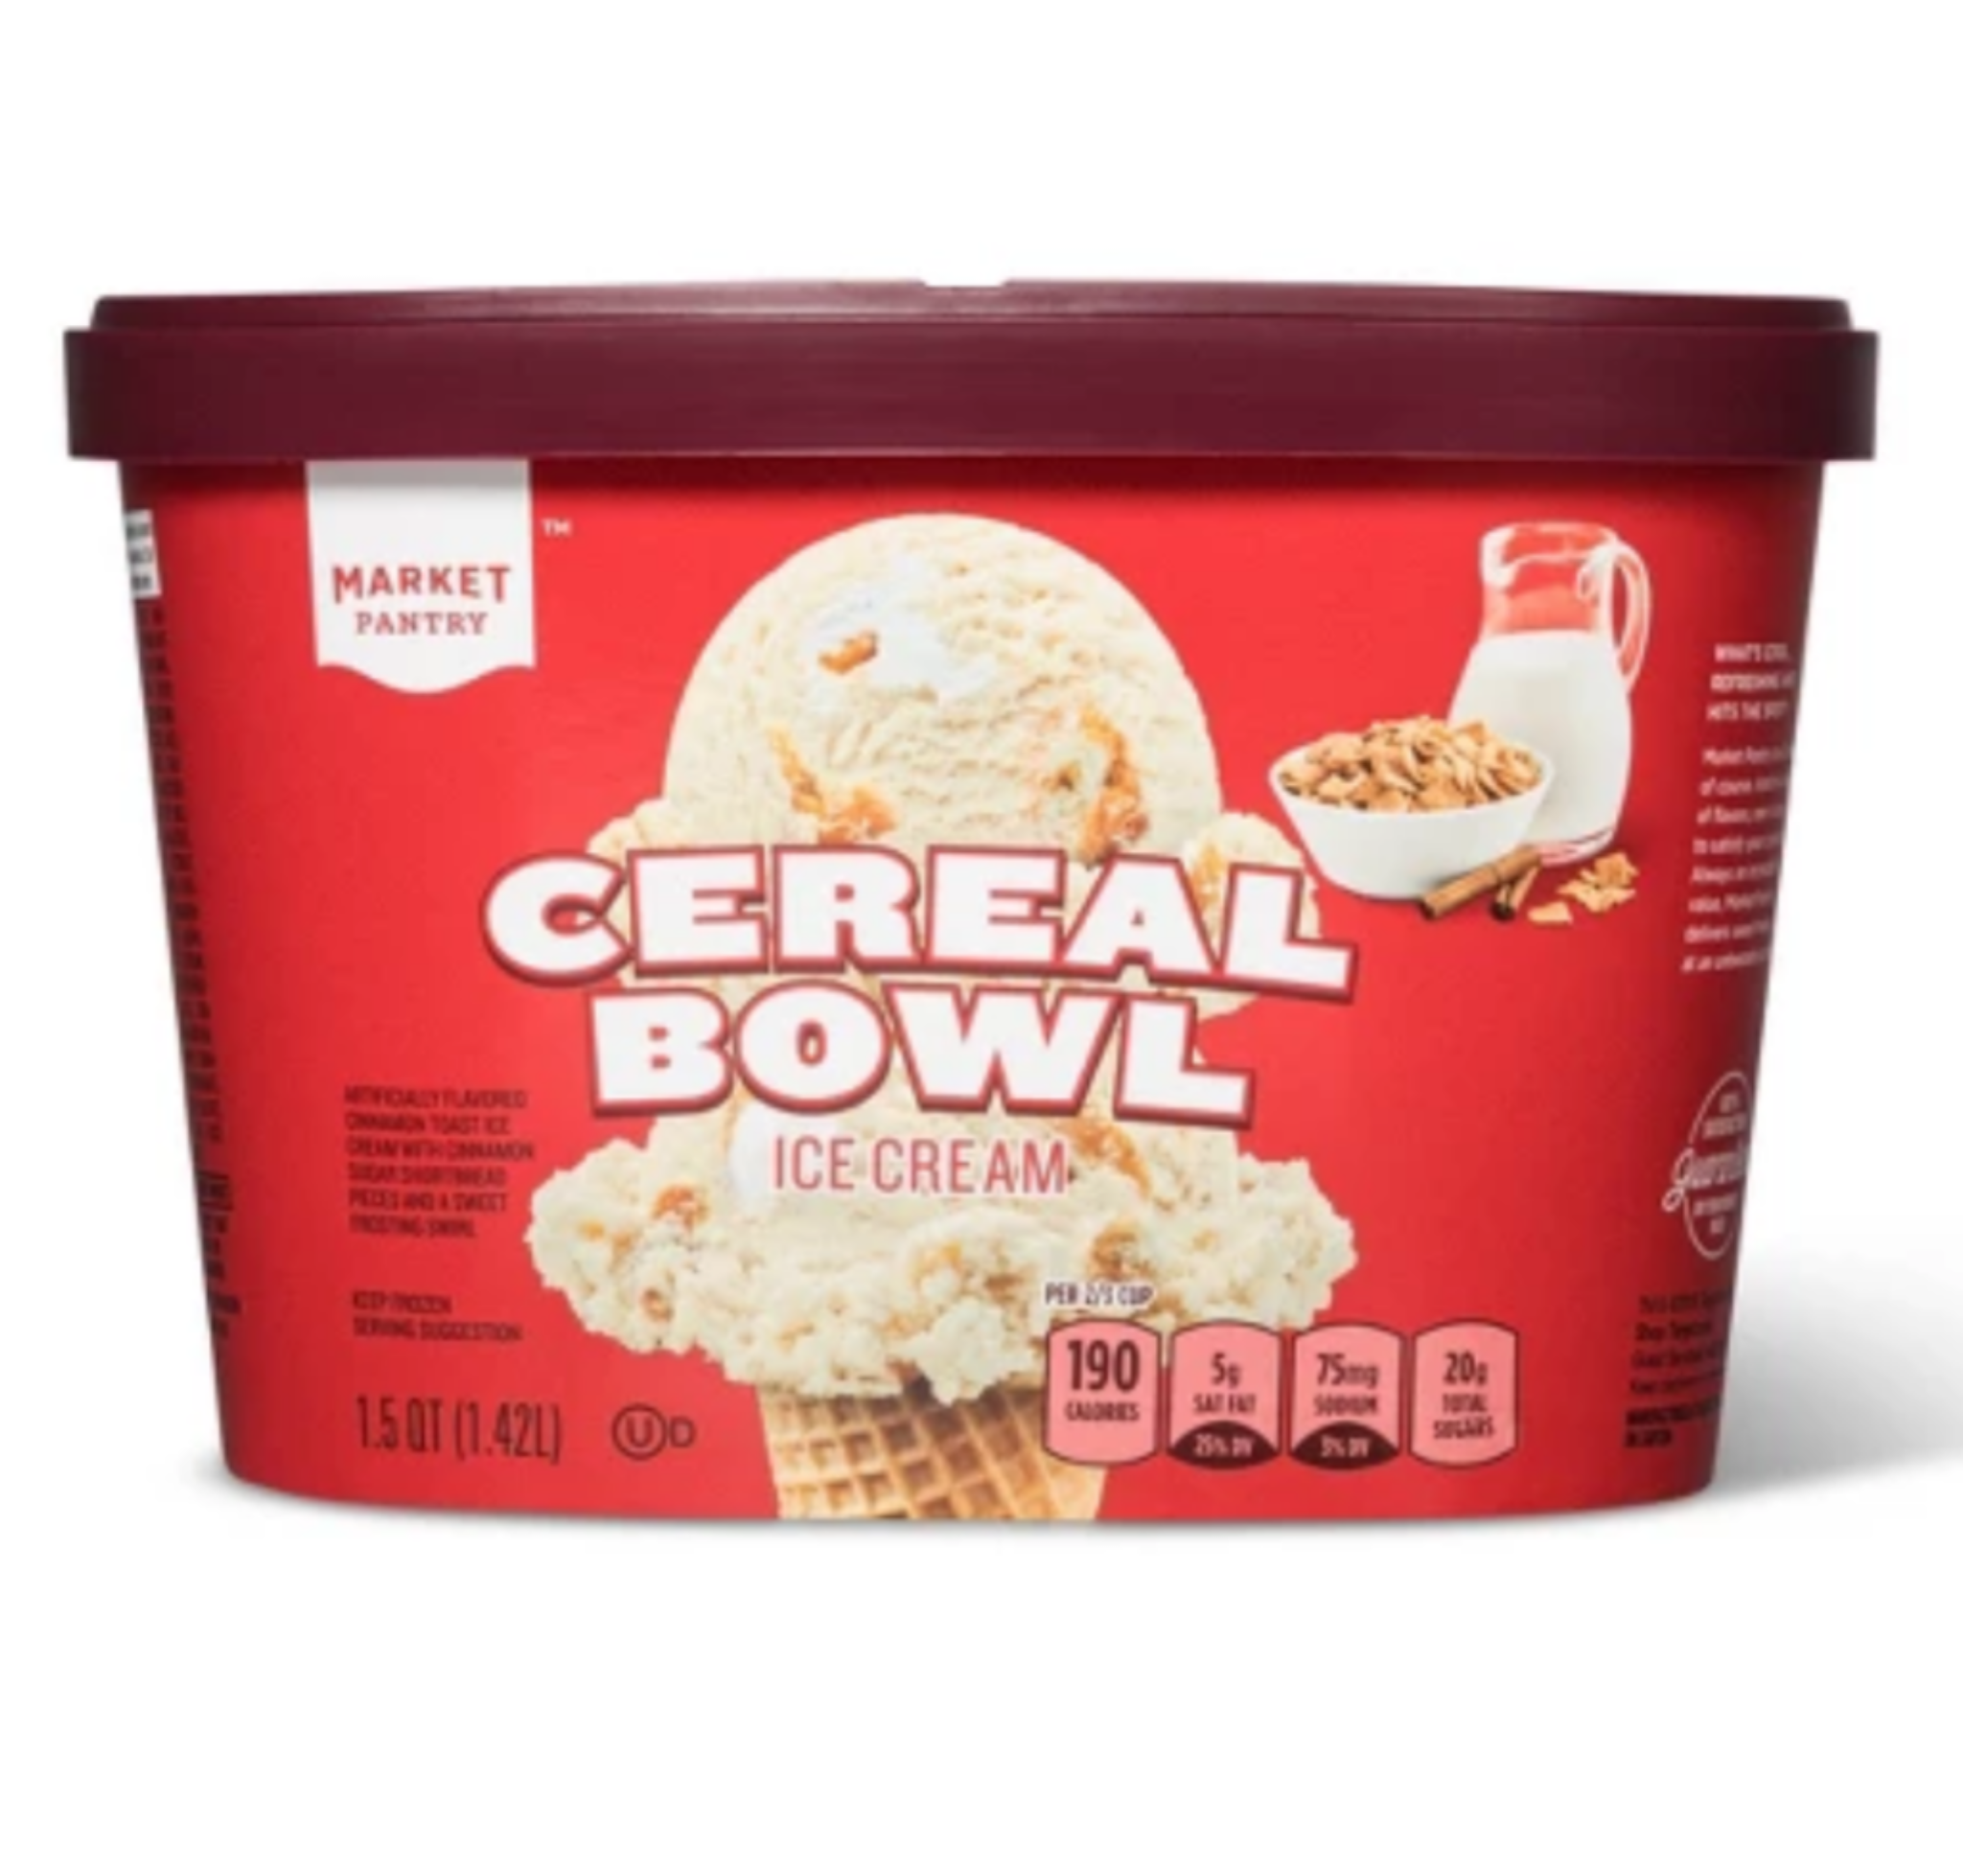 Market Pantry Target Cereal Bowl Ice Cream